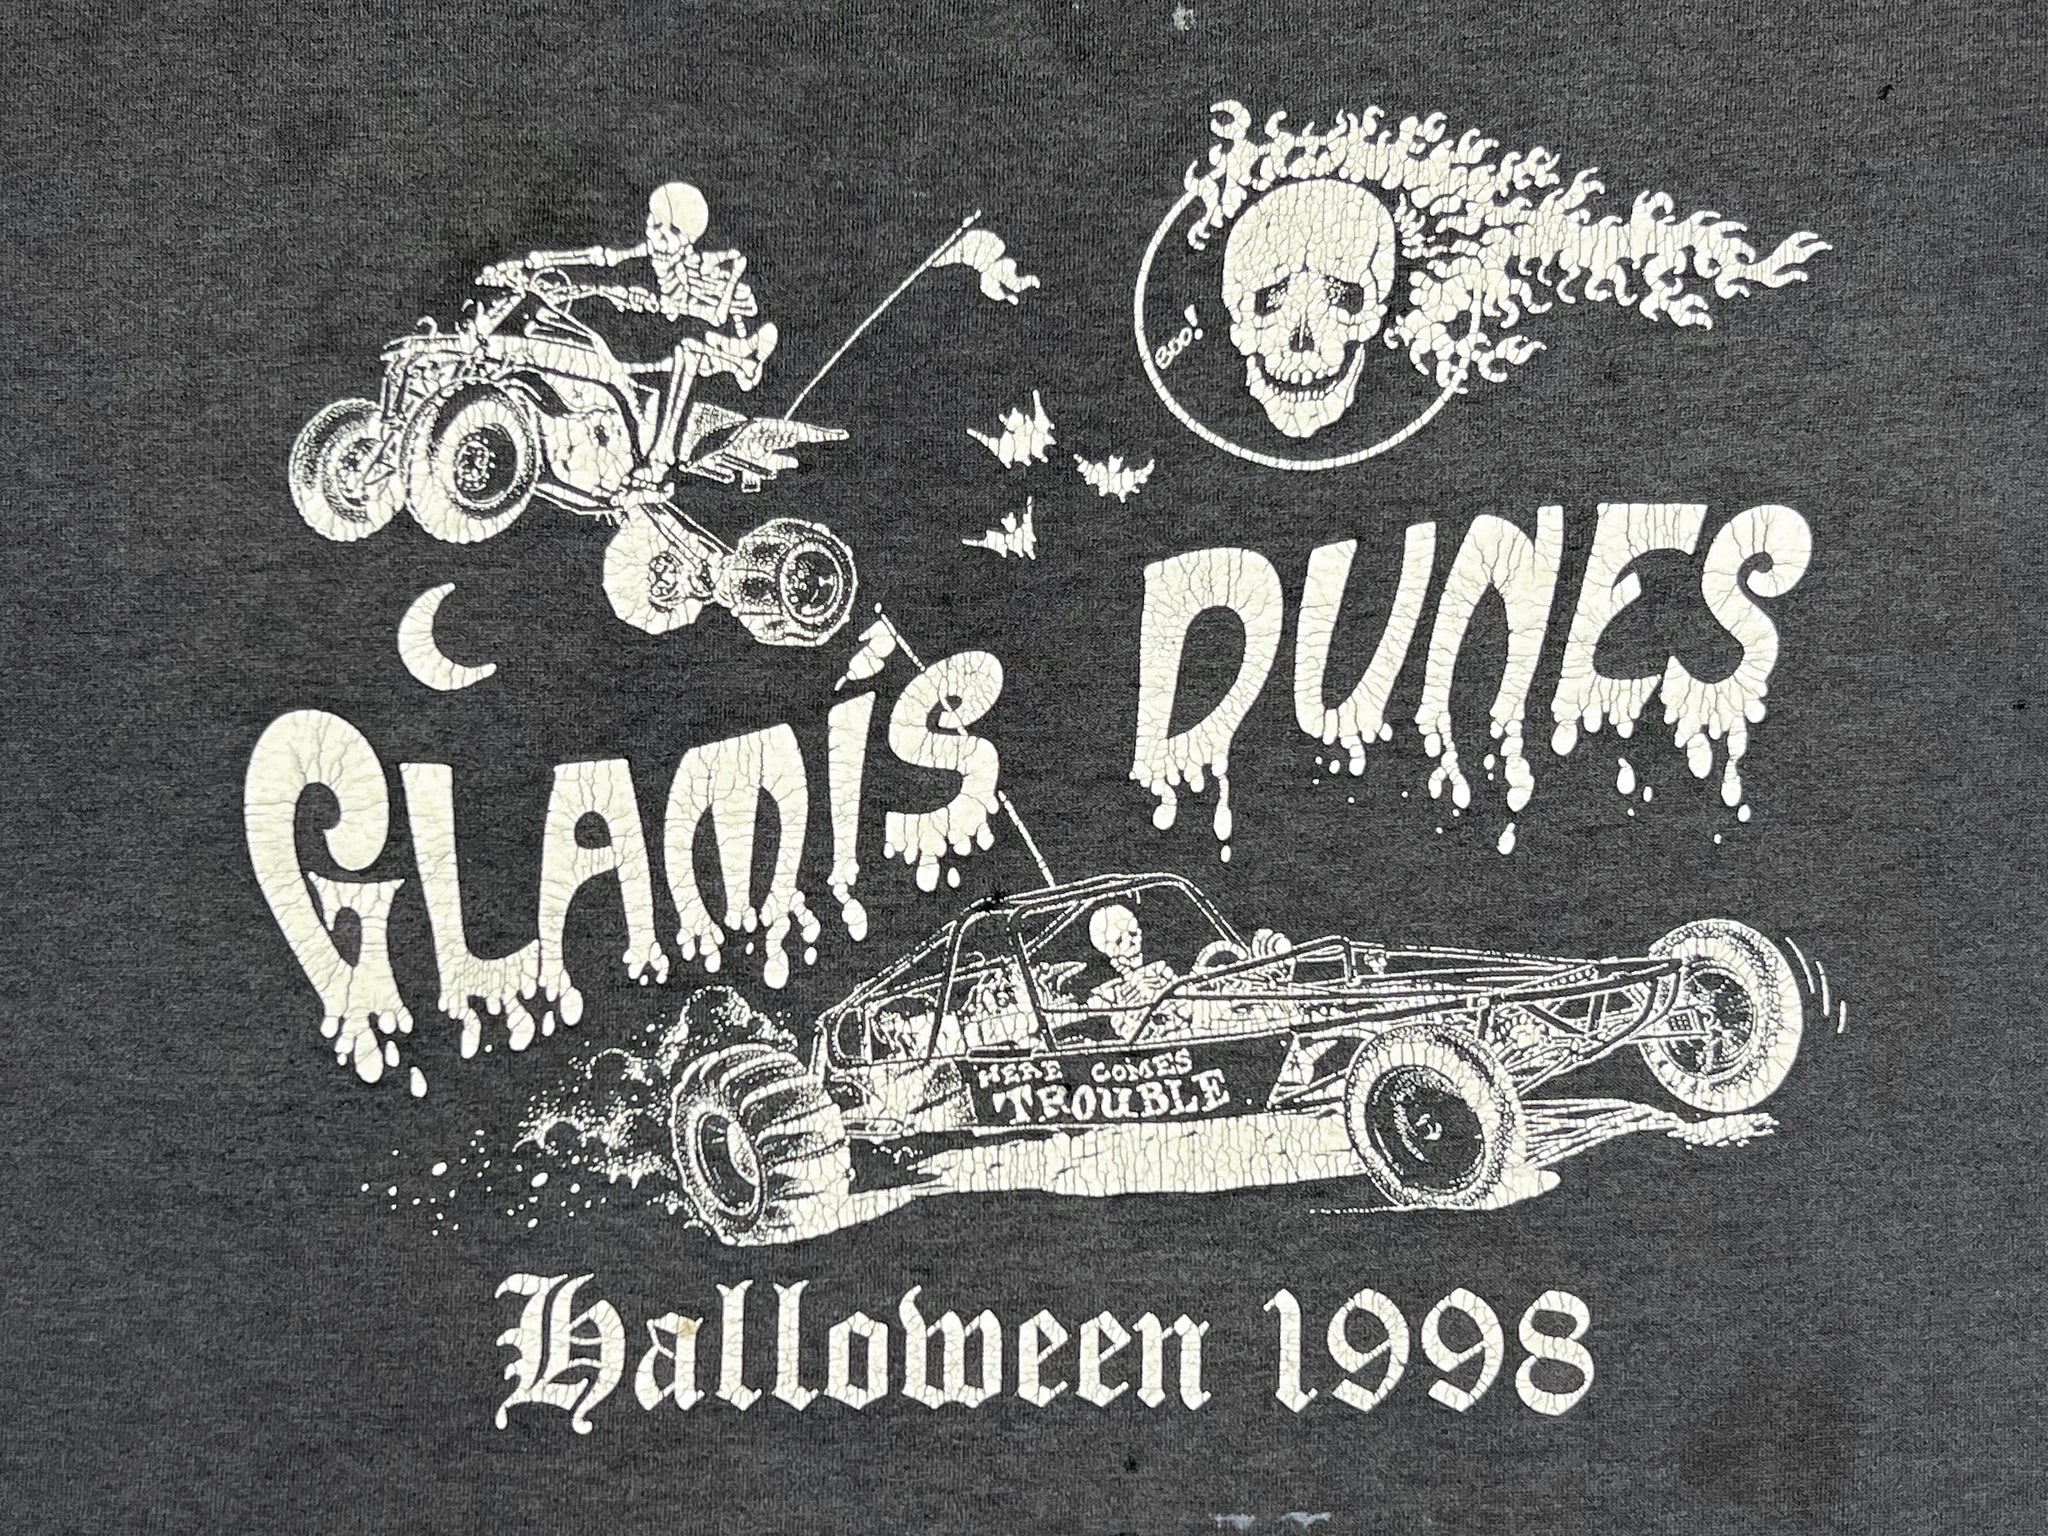 Glamis Dunes Halloween 1998 T-Shirt